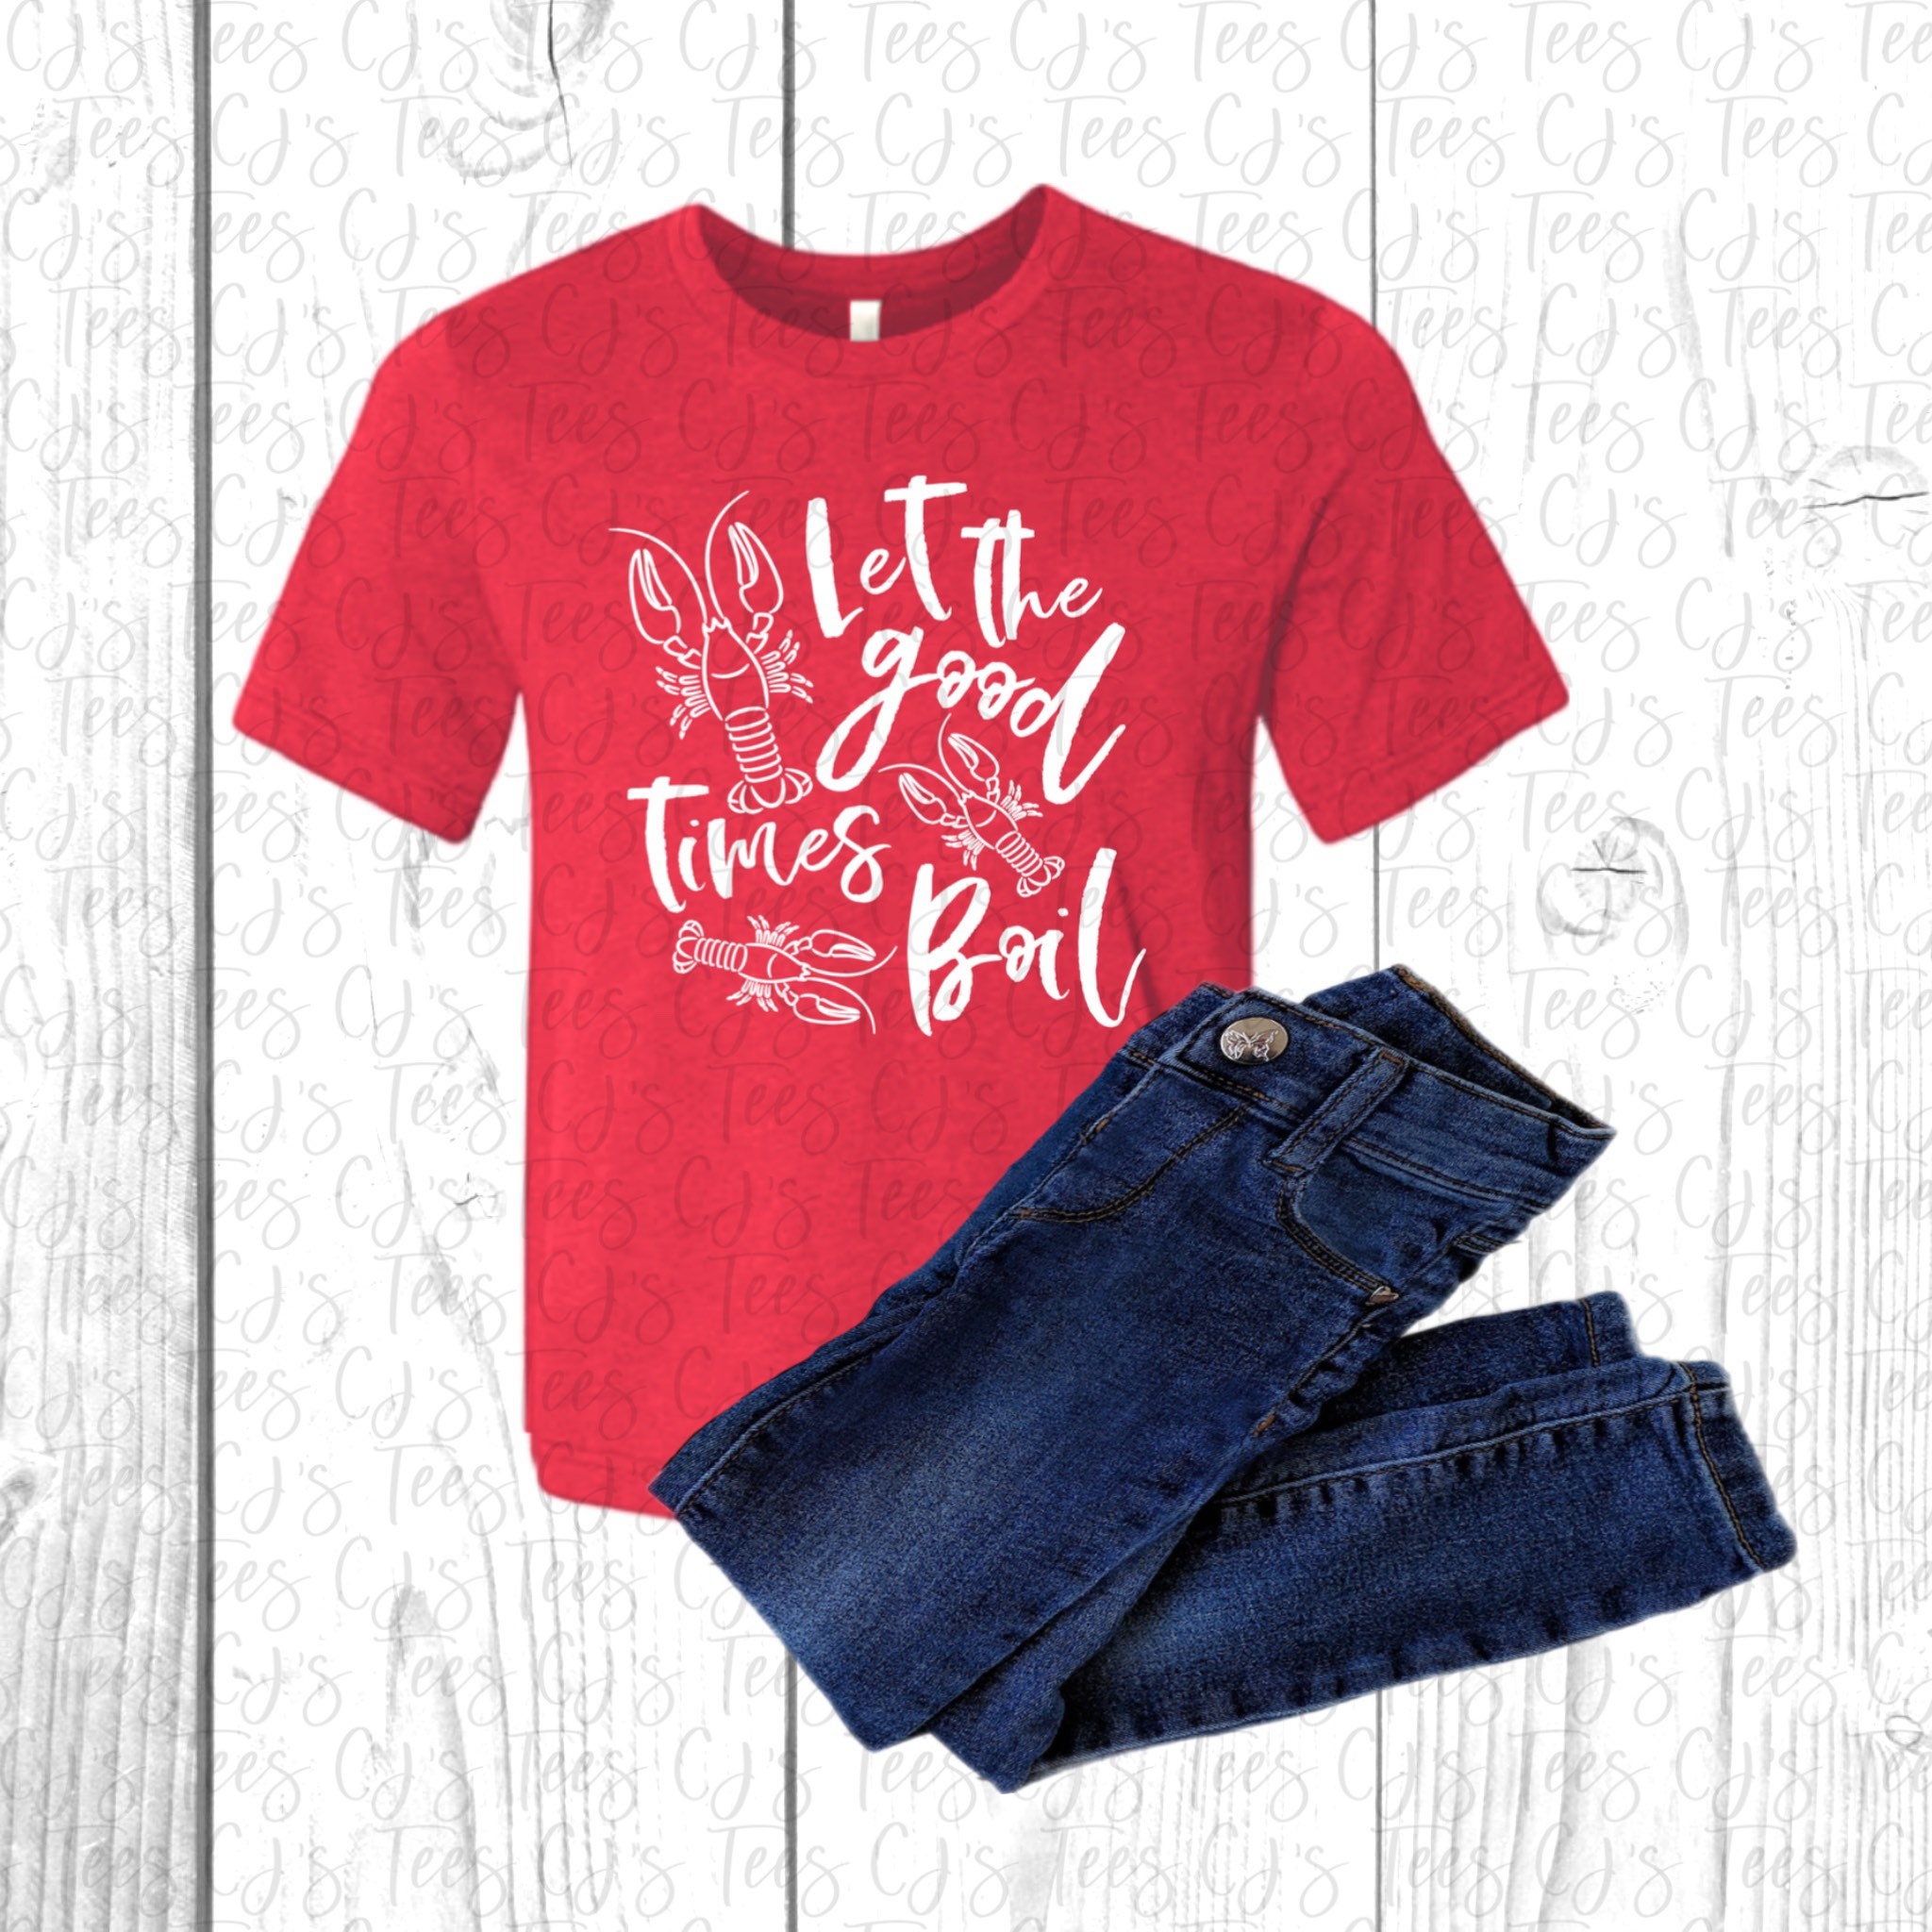 Let the Good Times Boil, Toddler and Youth Crawfish Tee, Southern Crawfish T -shirt, Louisiana Crawfish, Matching Family Crawfish Shirts 